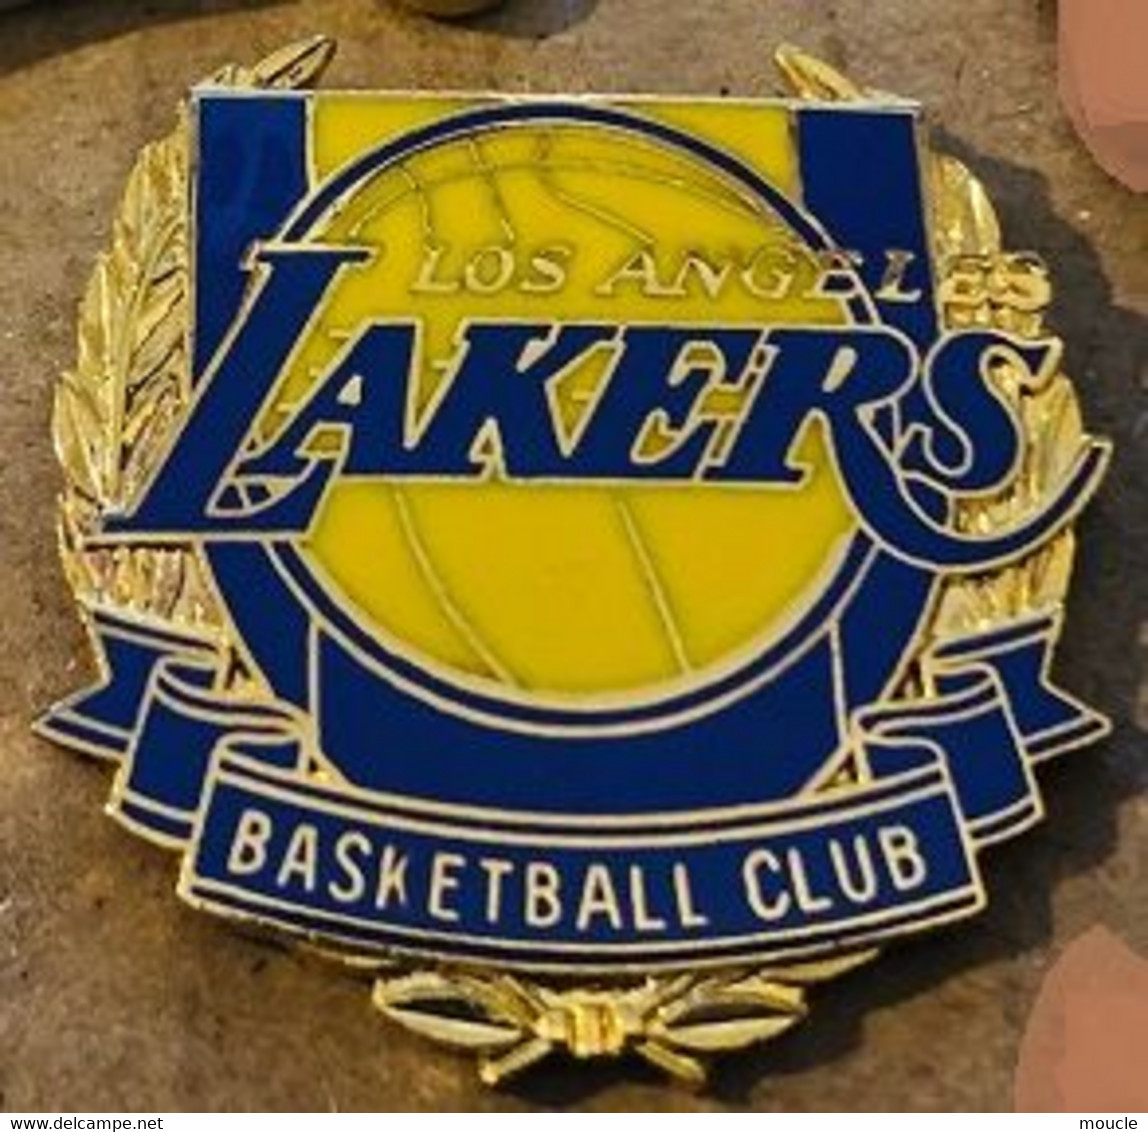 LOS ANGELES LAKERS - BASKEBALL CLUB - USA - ETATS UNIS D'AMERIQUE - NBA - UNITED STATES - LAURIERS - BALLON -    (14) - Baloncesto